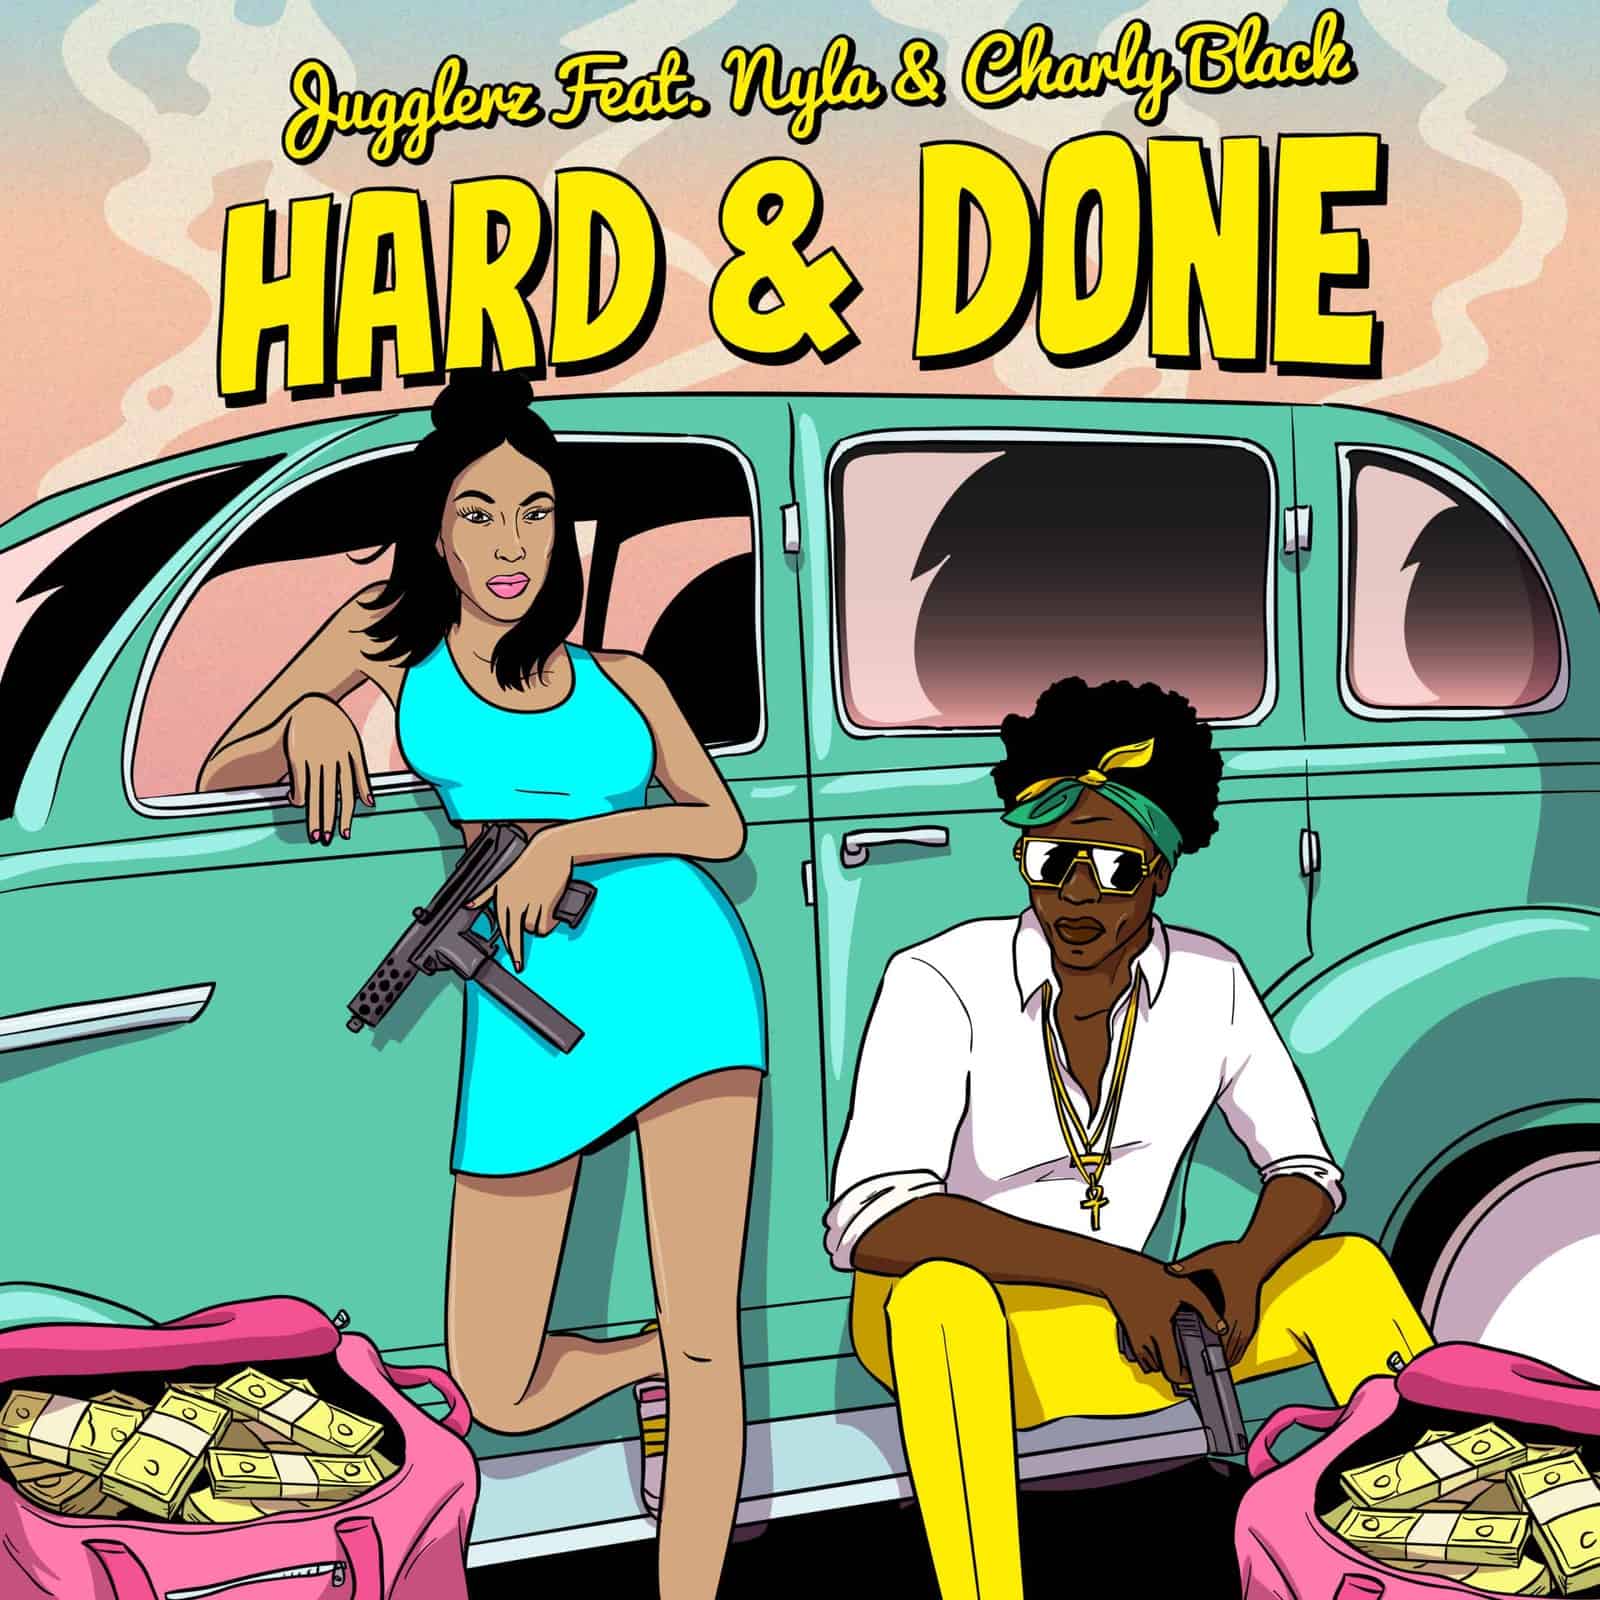 Jugglerz feat. Nyla & Charly Black - Hard & Done